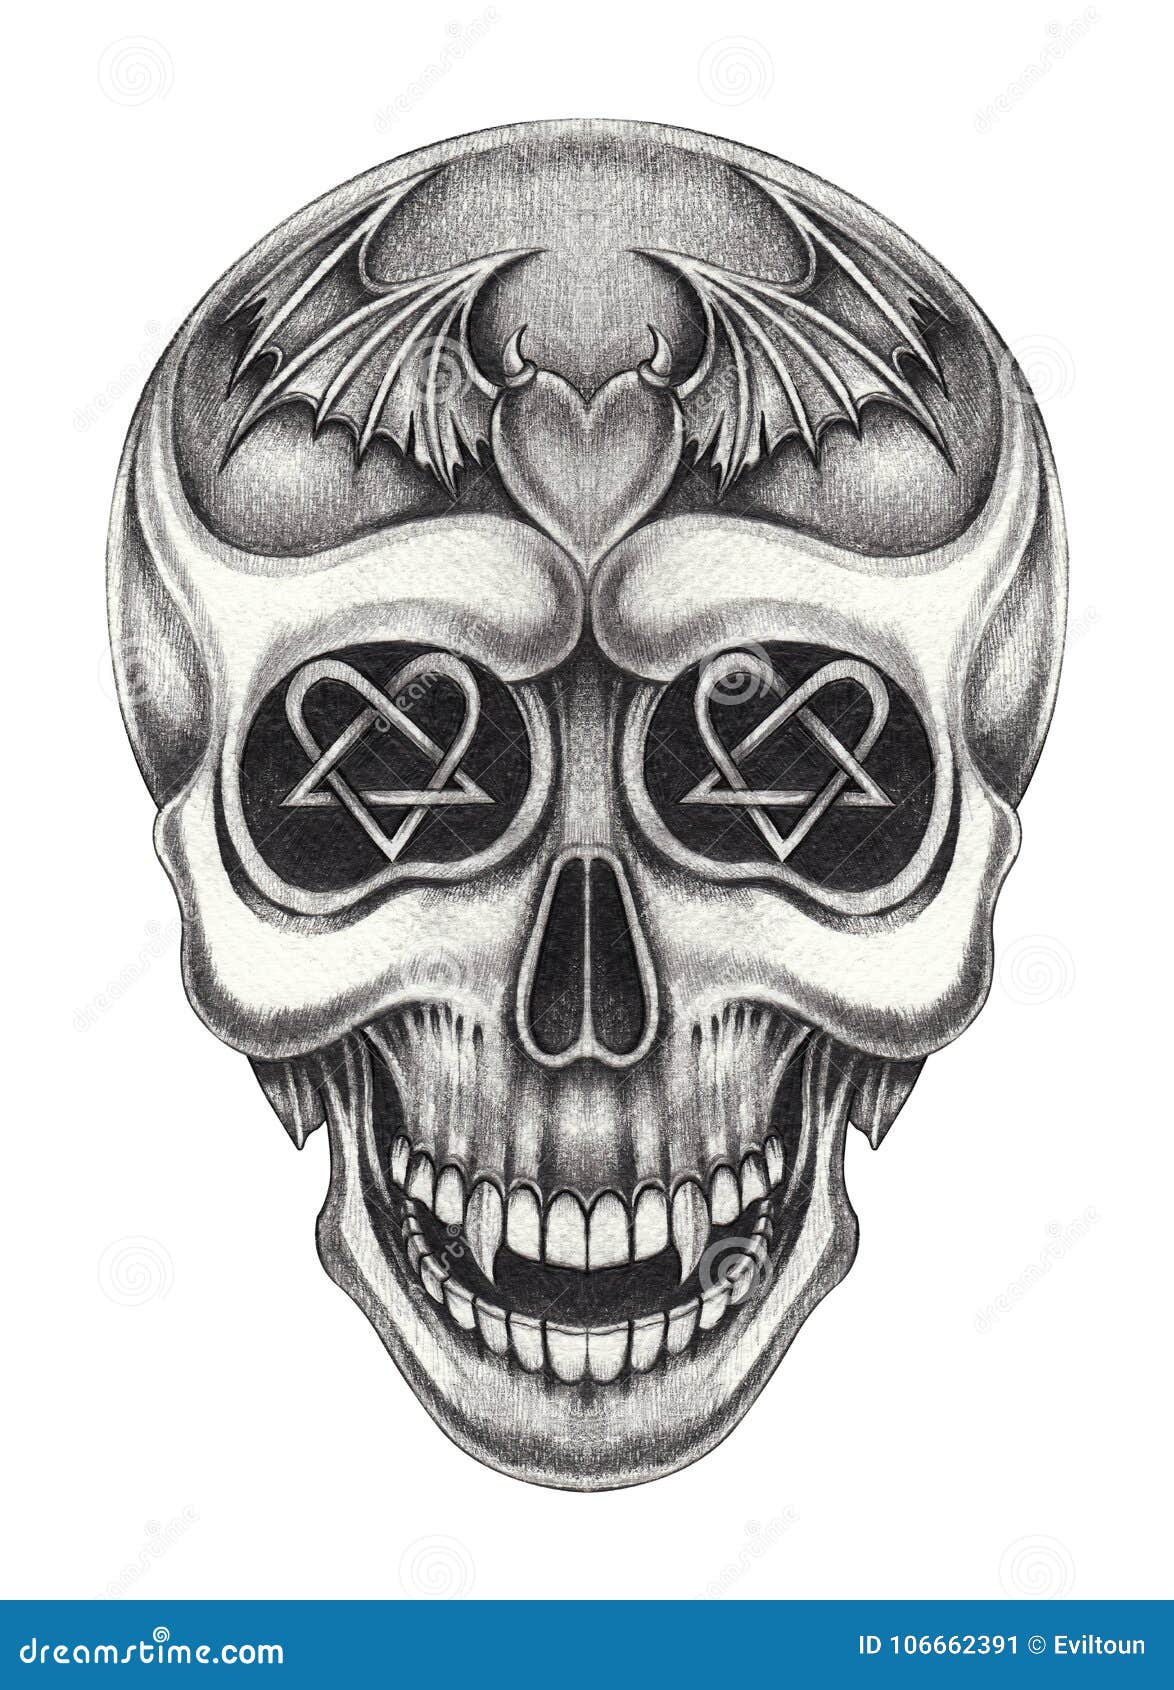 Pin on Inspirations Skulls  Skeletons